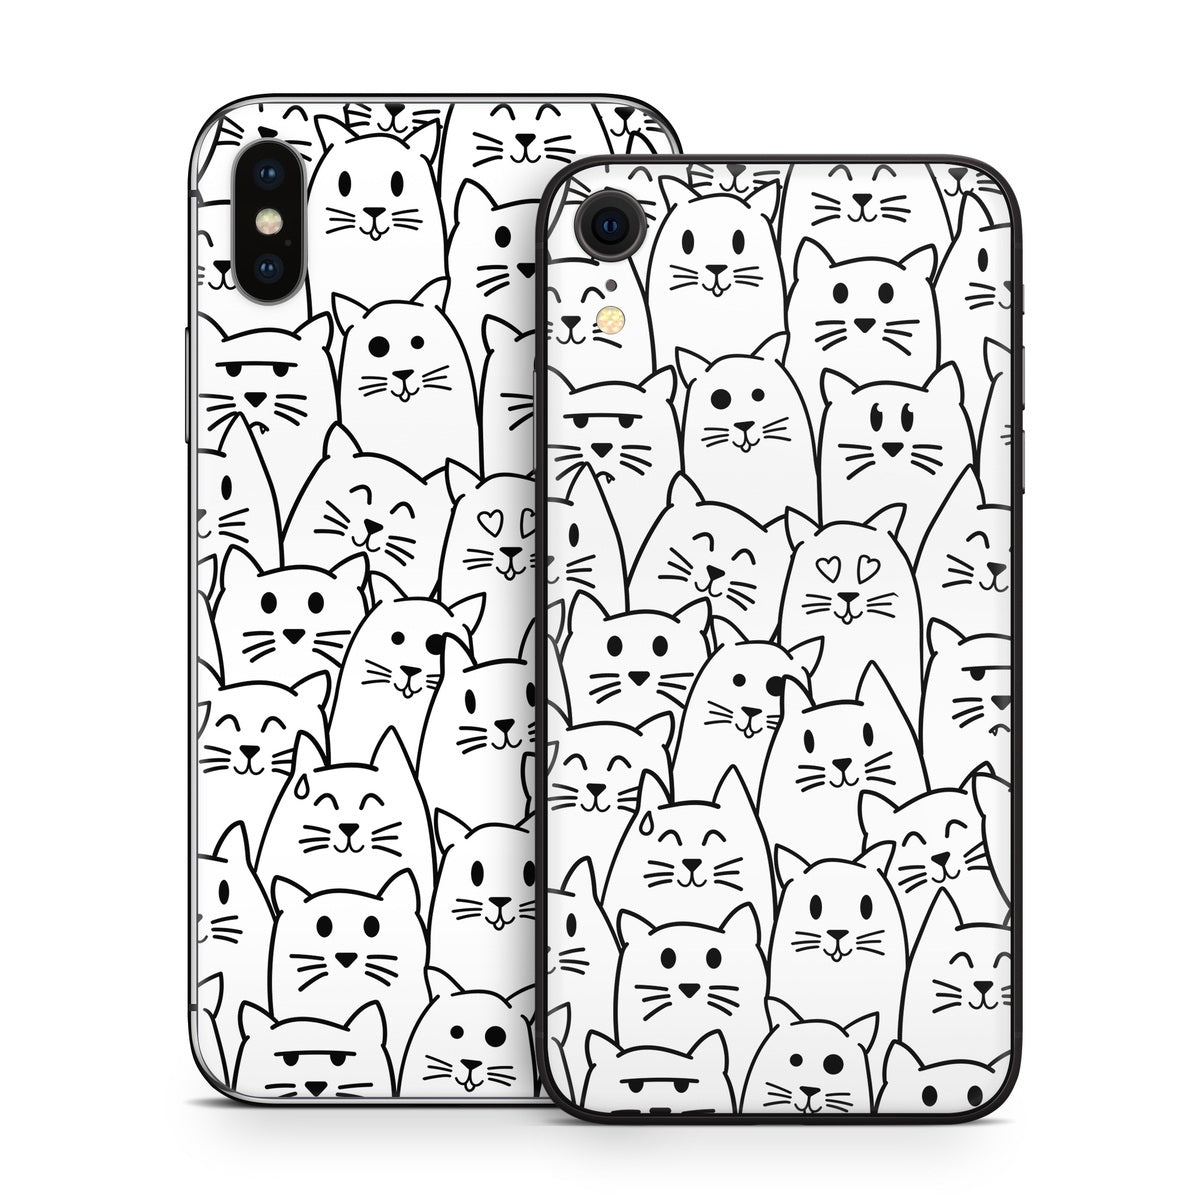 Moody Cats - Apple iPhone X Skin